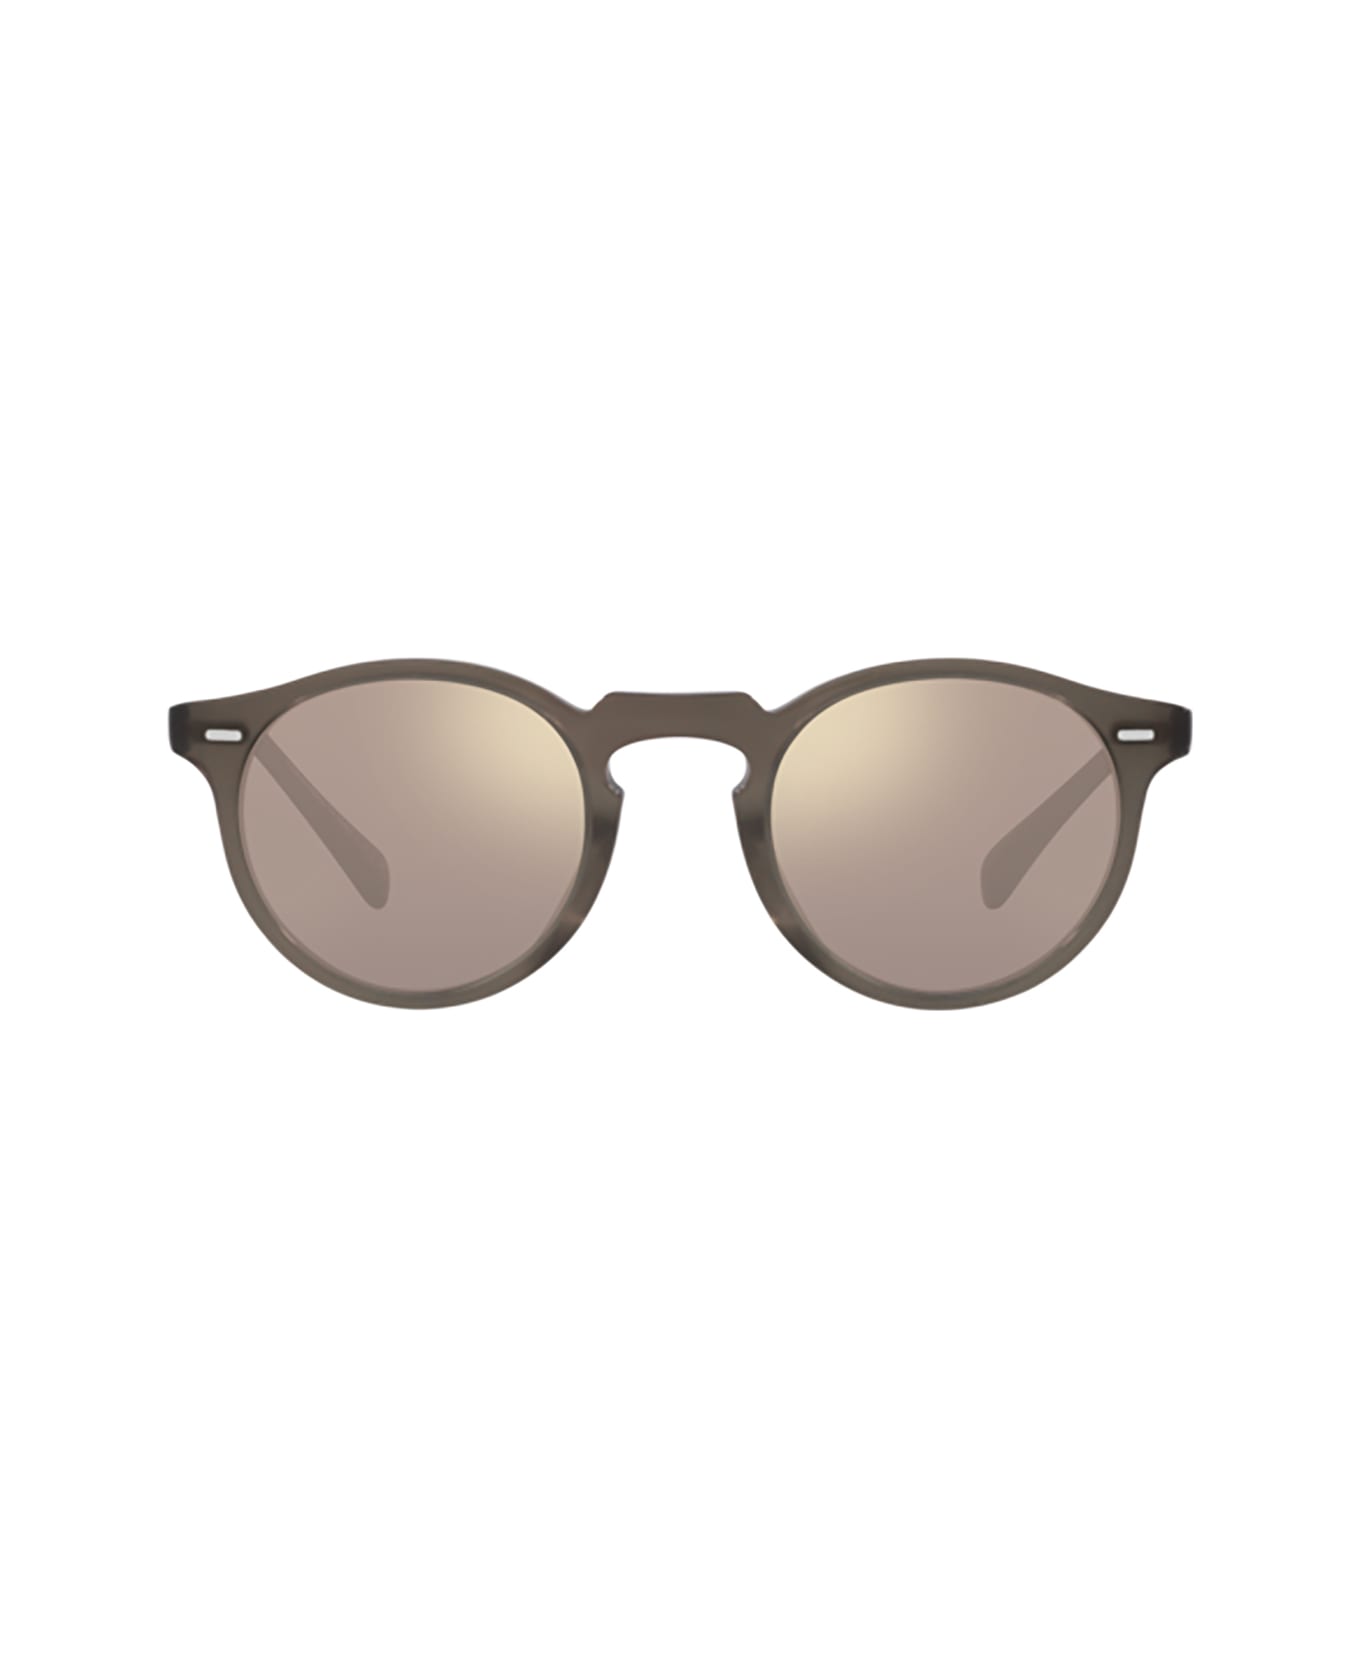 Oliver Peoples Ov5217s Taupe Sunglasses - Taupe